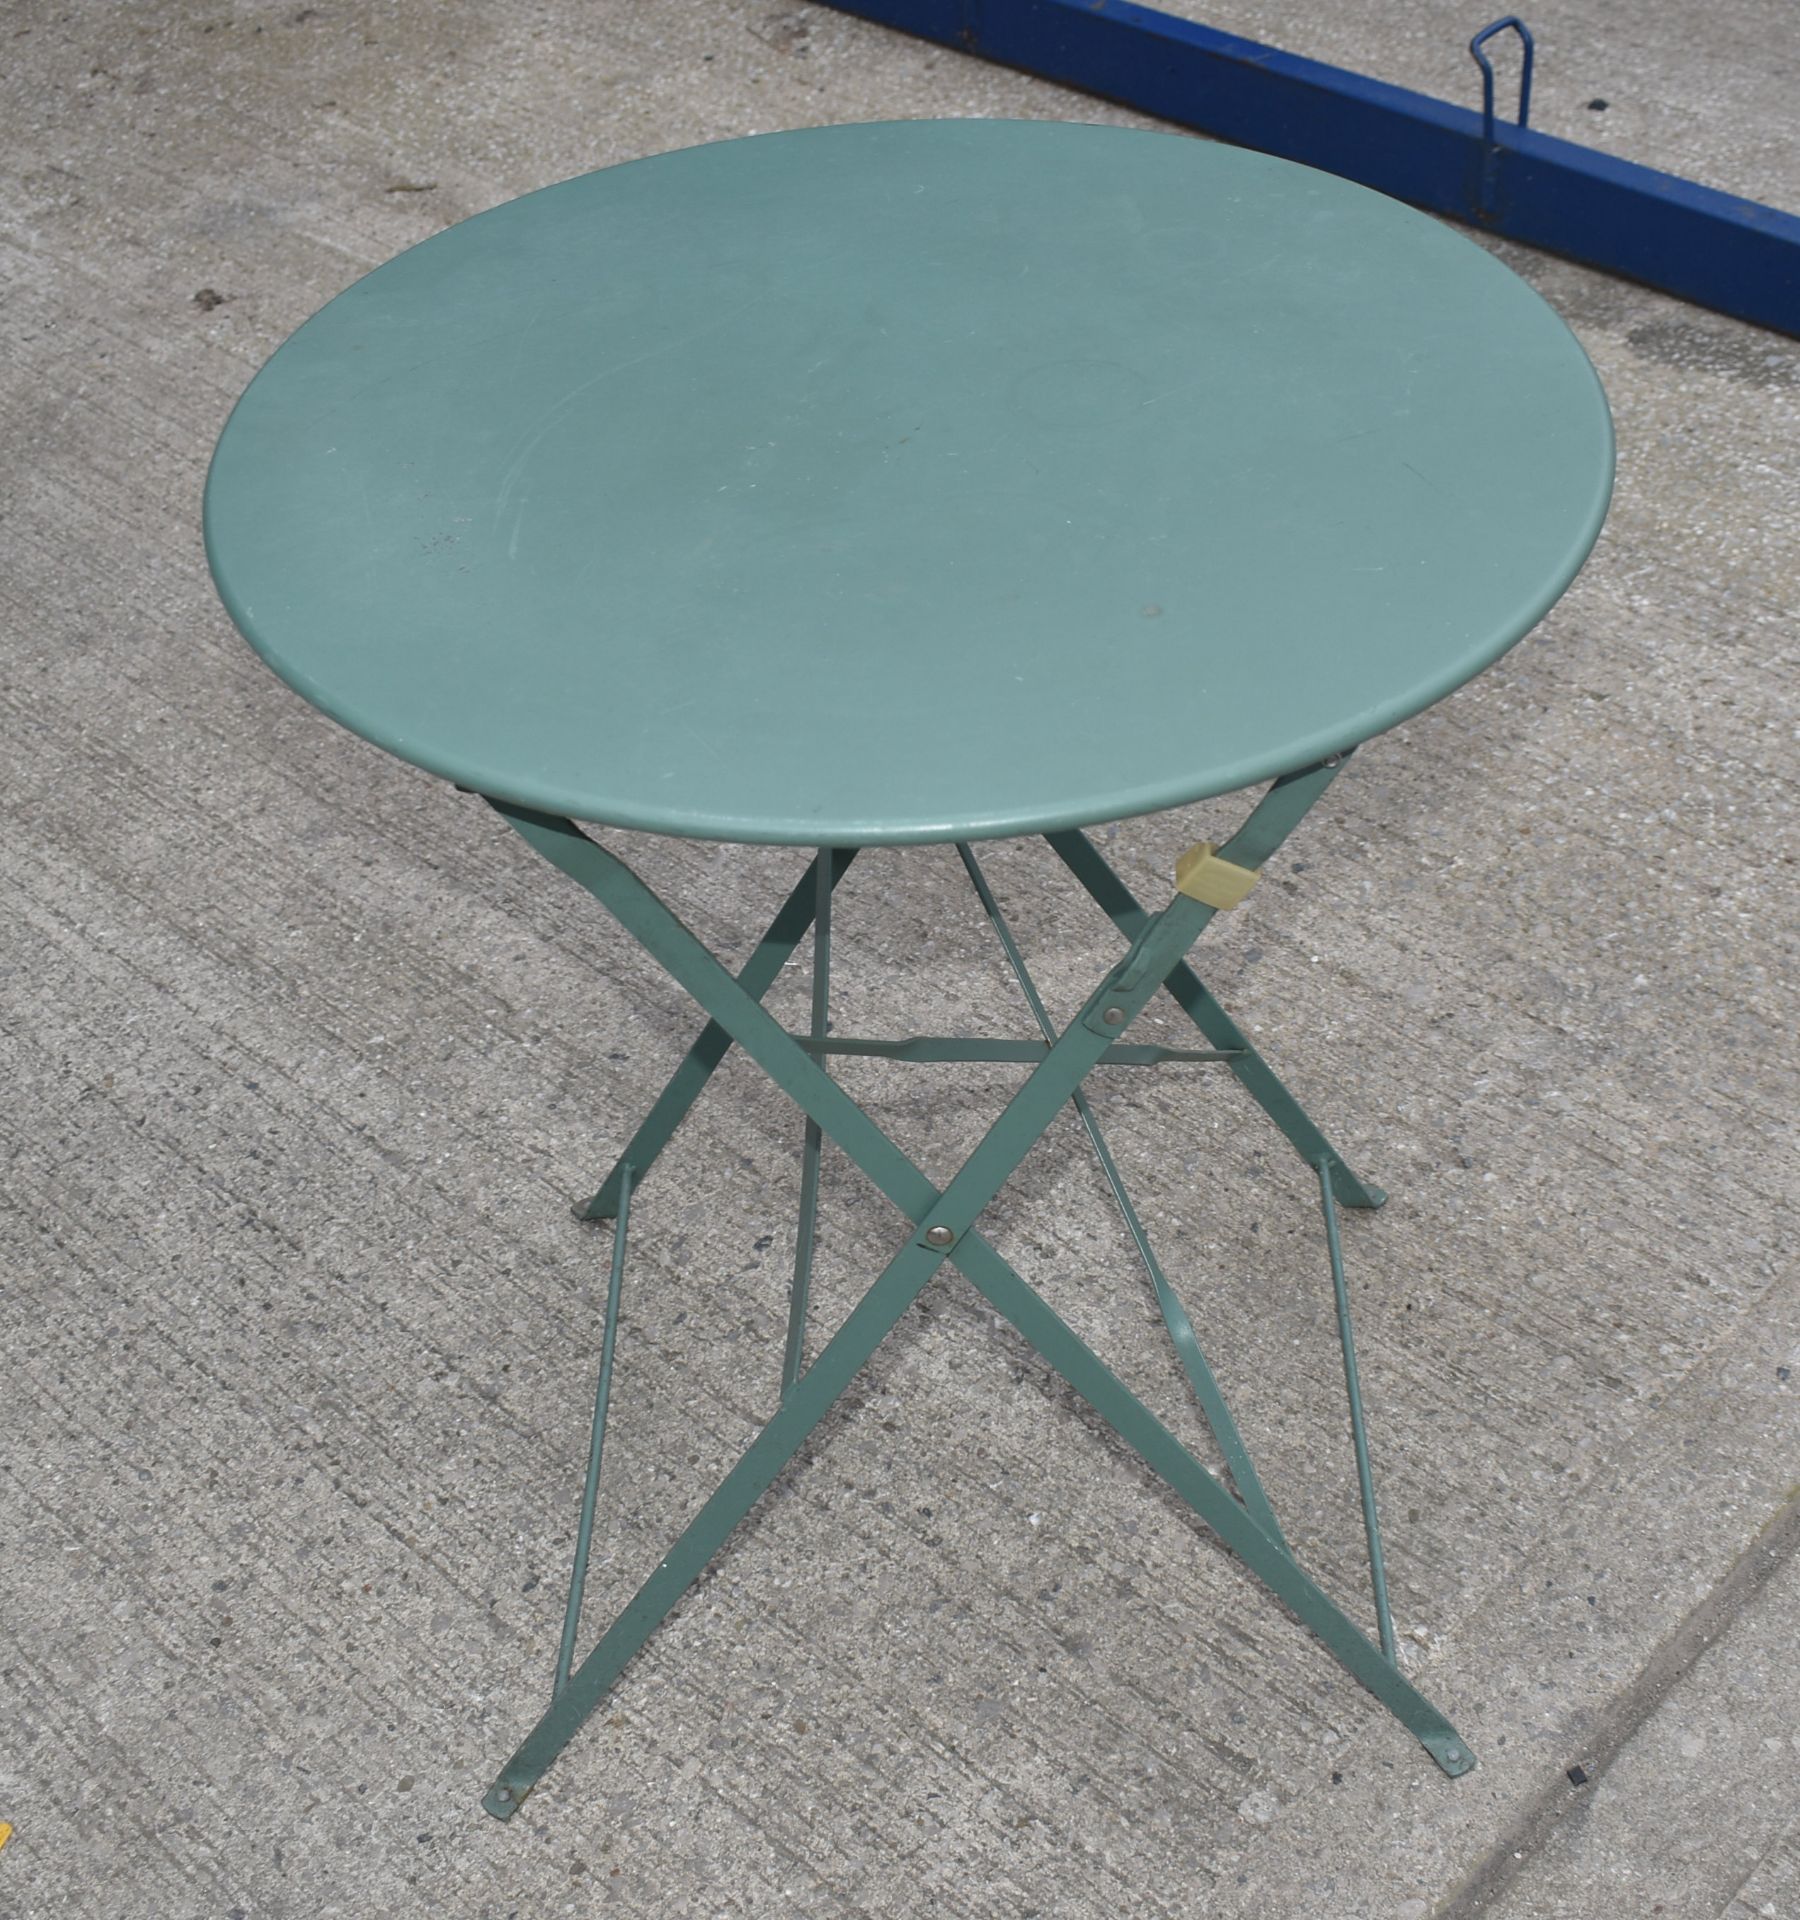 1 x Round Foldaway Green Metal Garden Table - 60 (D) x 71 (H) cms - Ref: K235 - CL905 - Location: Al - Image 6 of 10